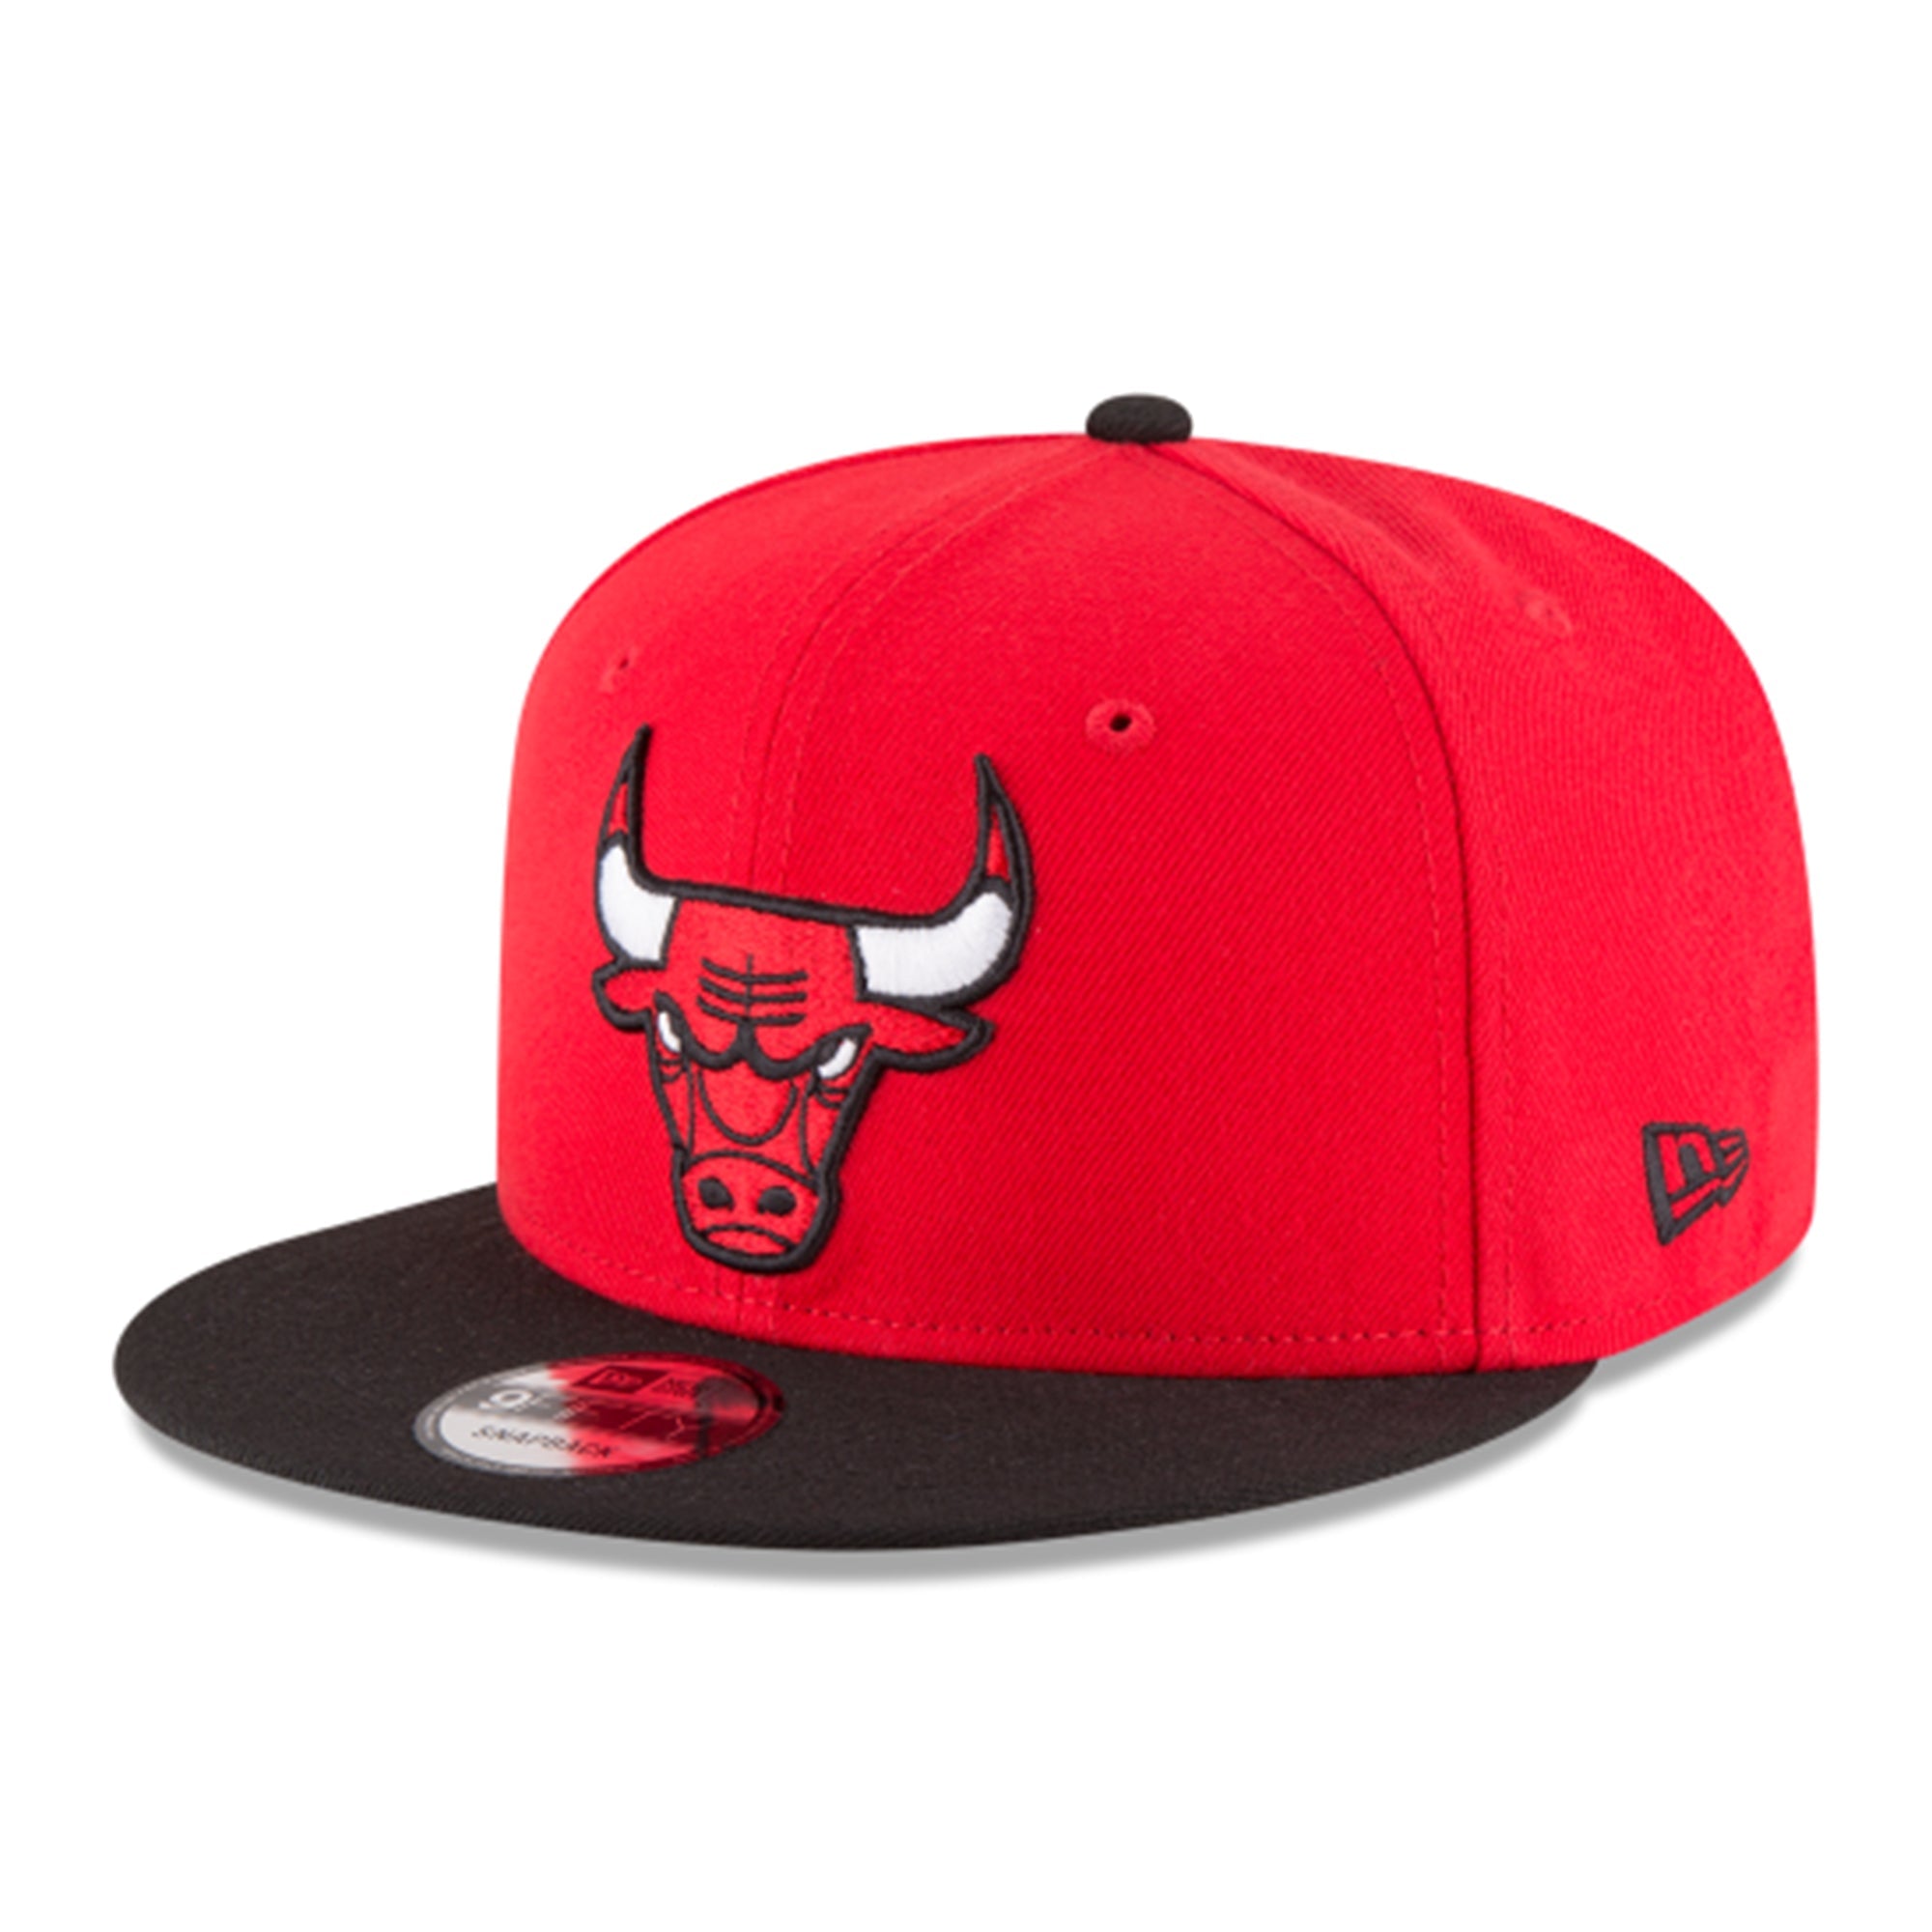 New Era Chicago Bulls Snapback Hat (Red Black)1